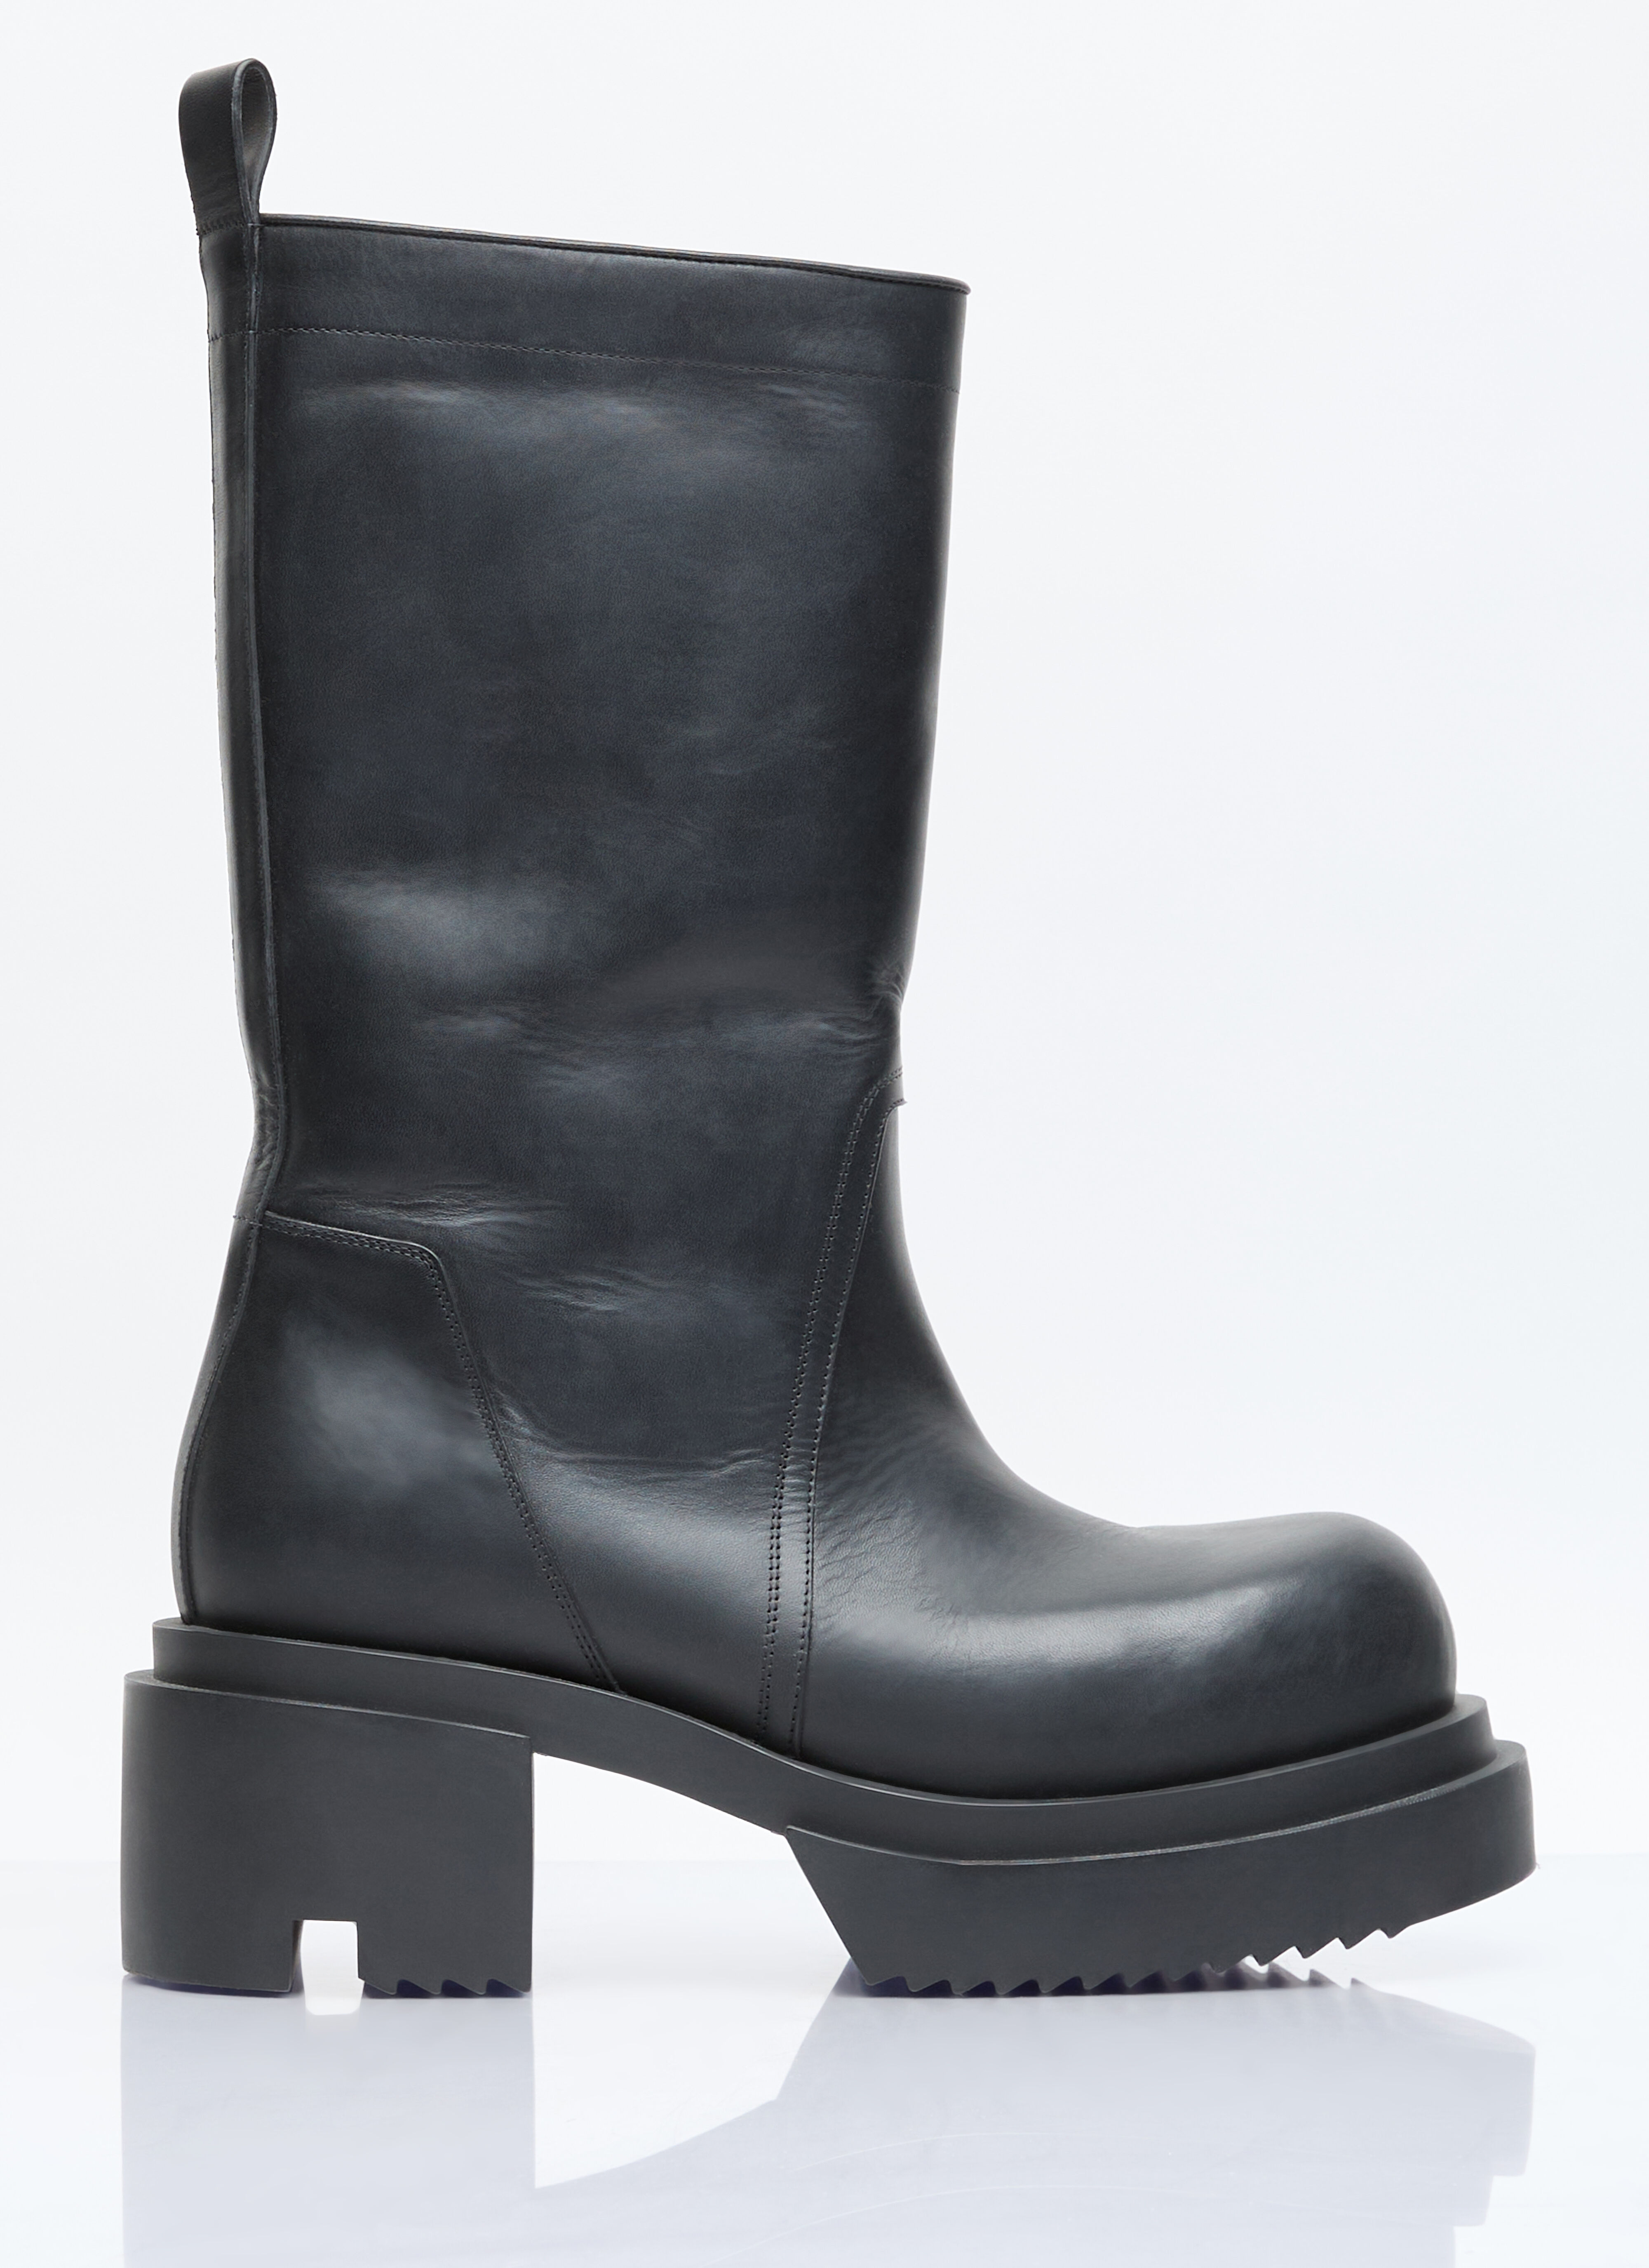 Vivienne Westwood Pull On Bogun Boots Grey vvw0156010